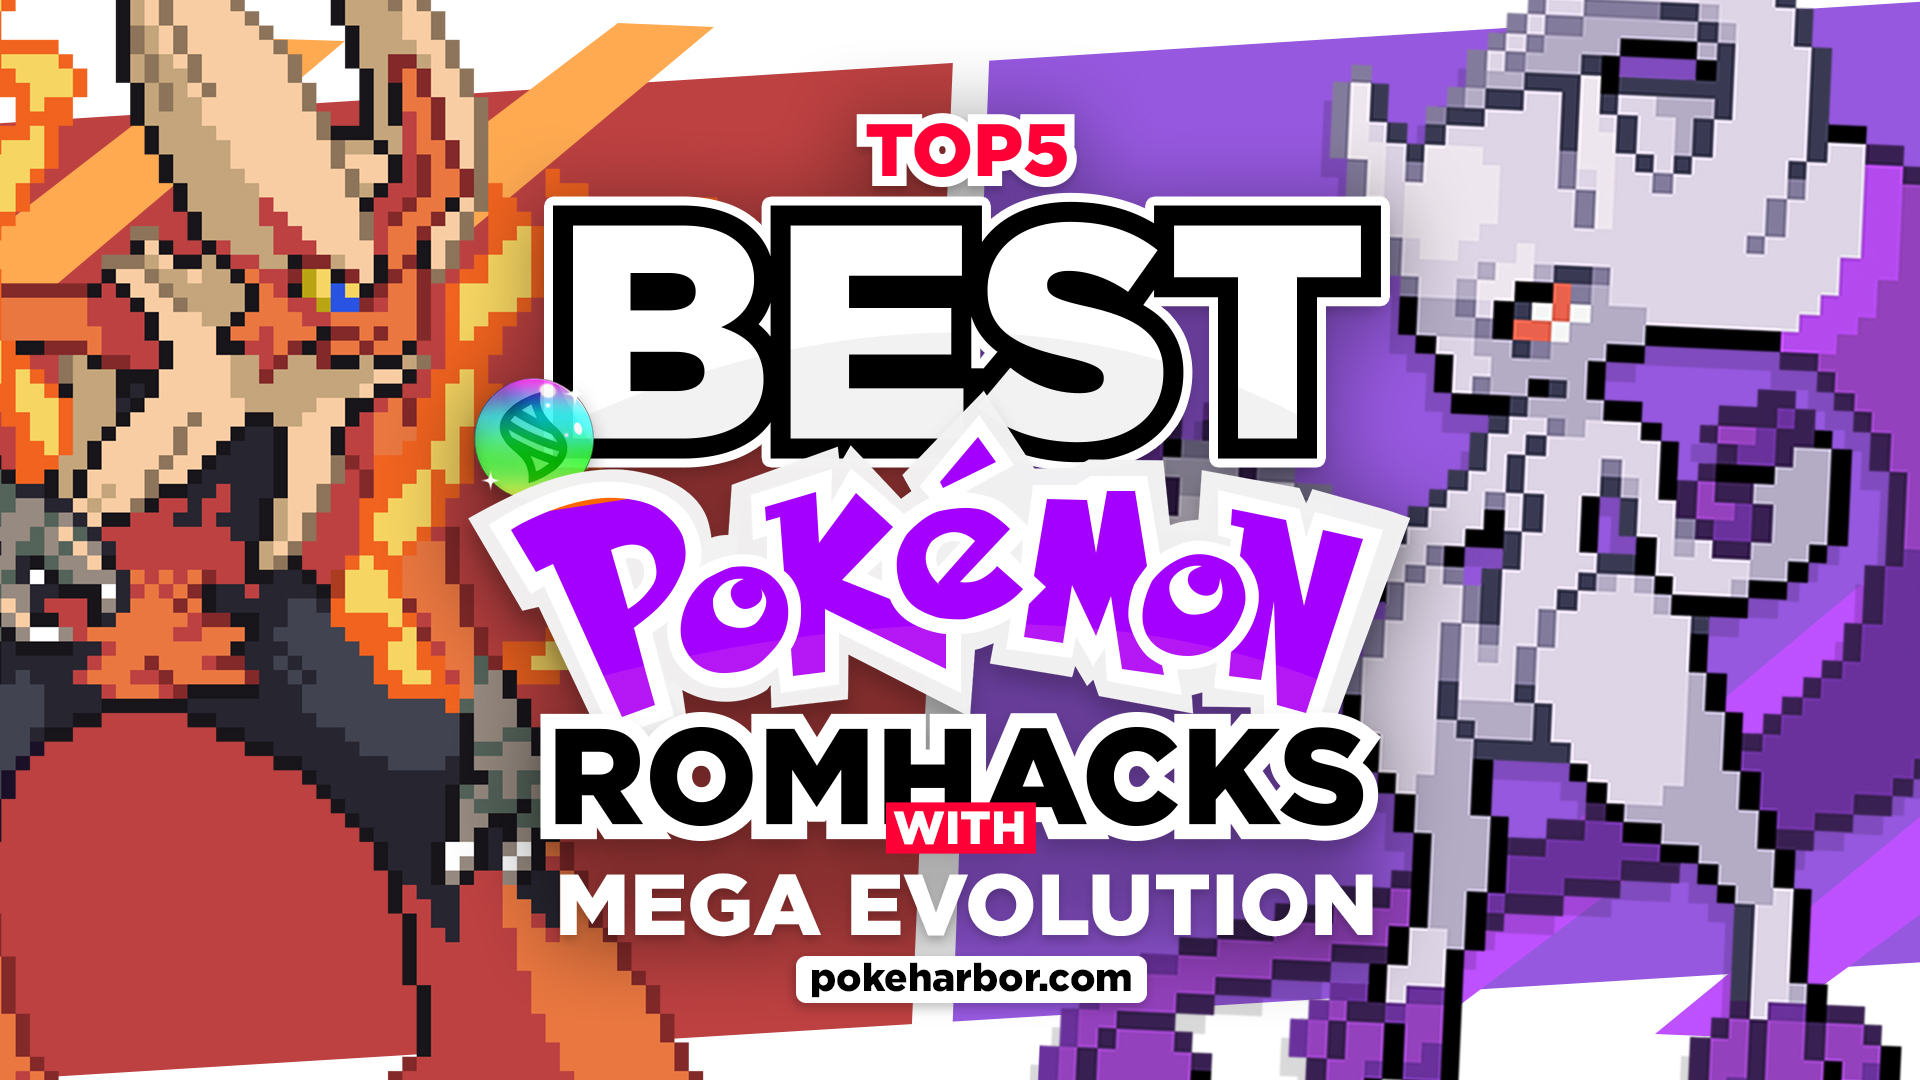 temperatur Theseus Ristede Top 5 BEST Pokemon GBA ROM Hacks With Mega Evolution - PokéHarbor